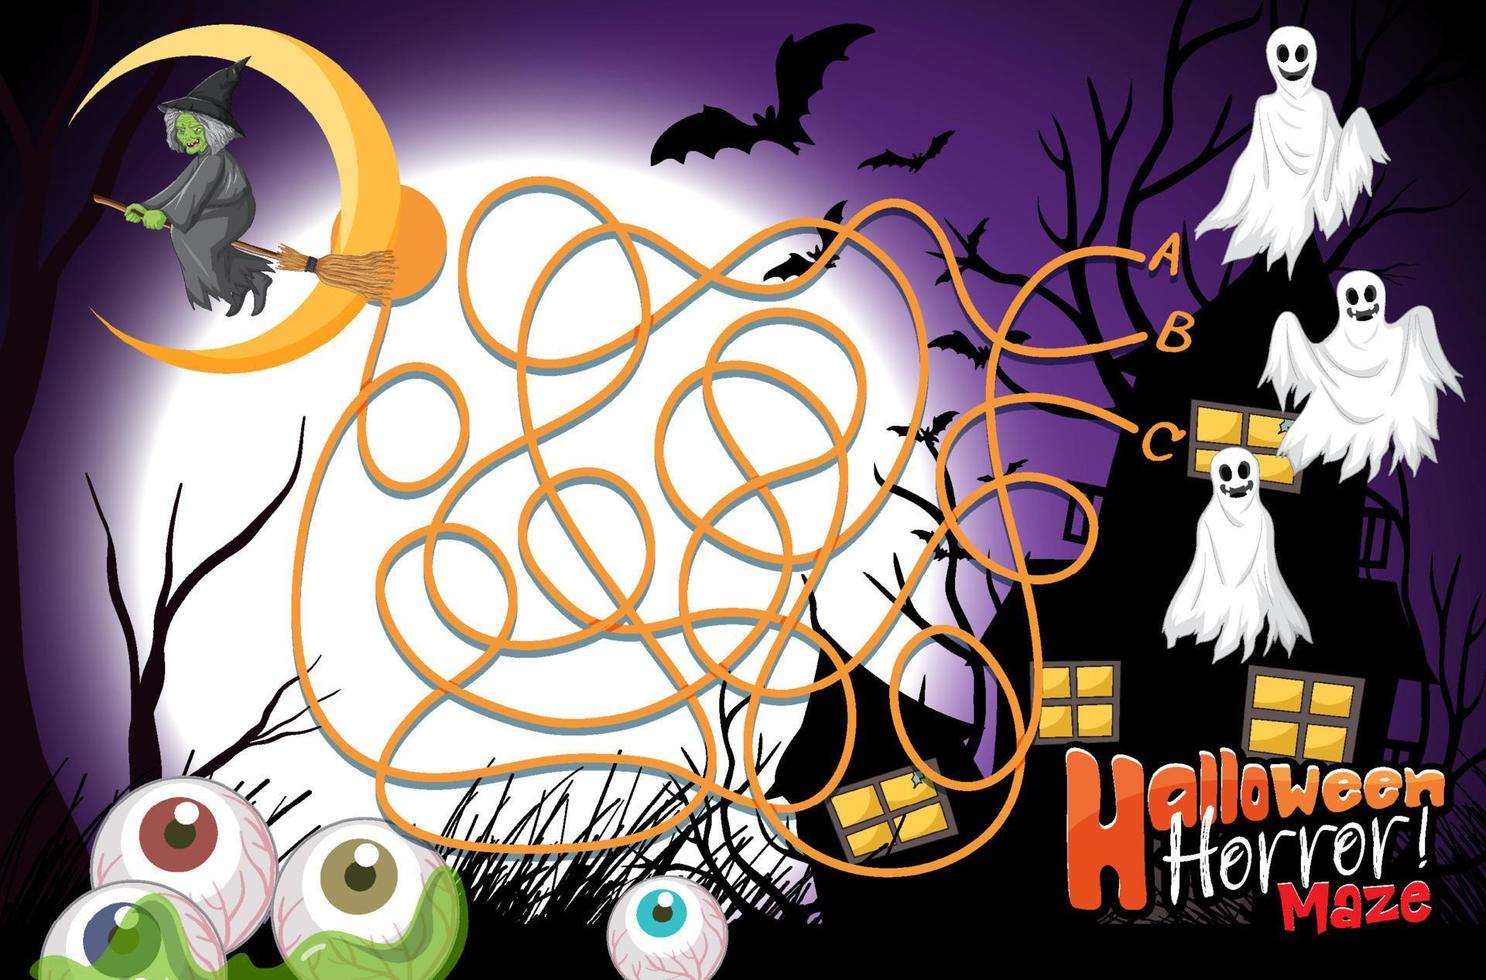 Halloween horror maze game template vector